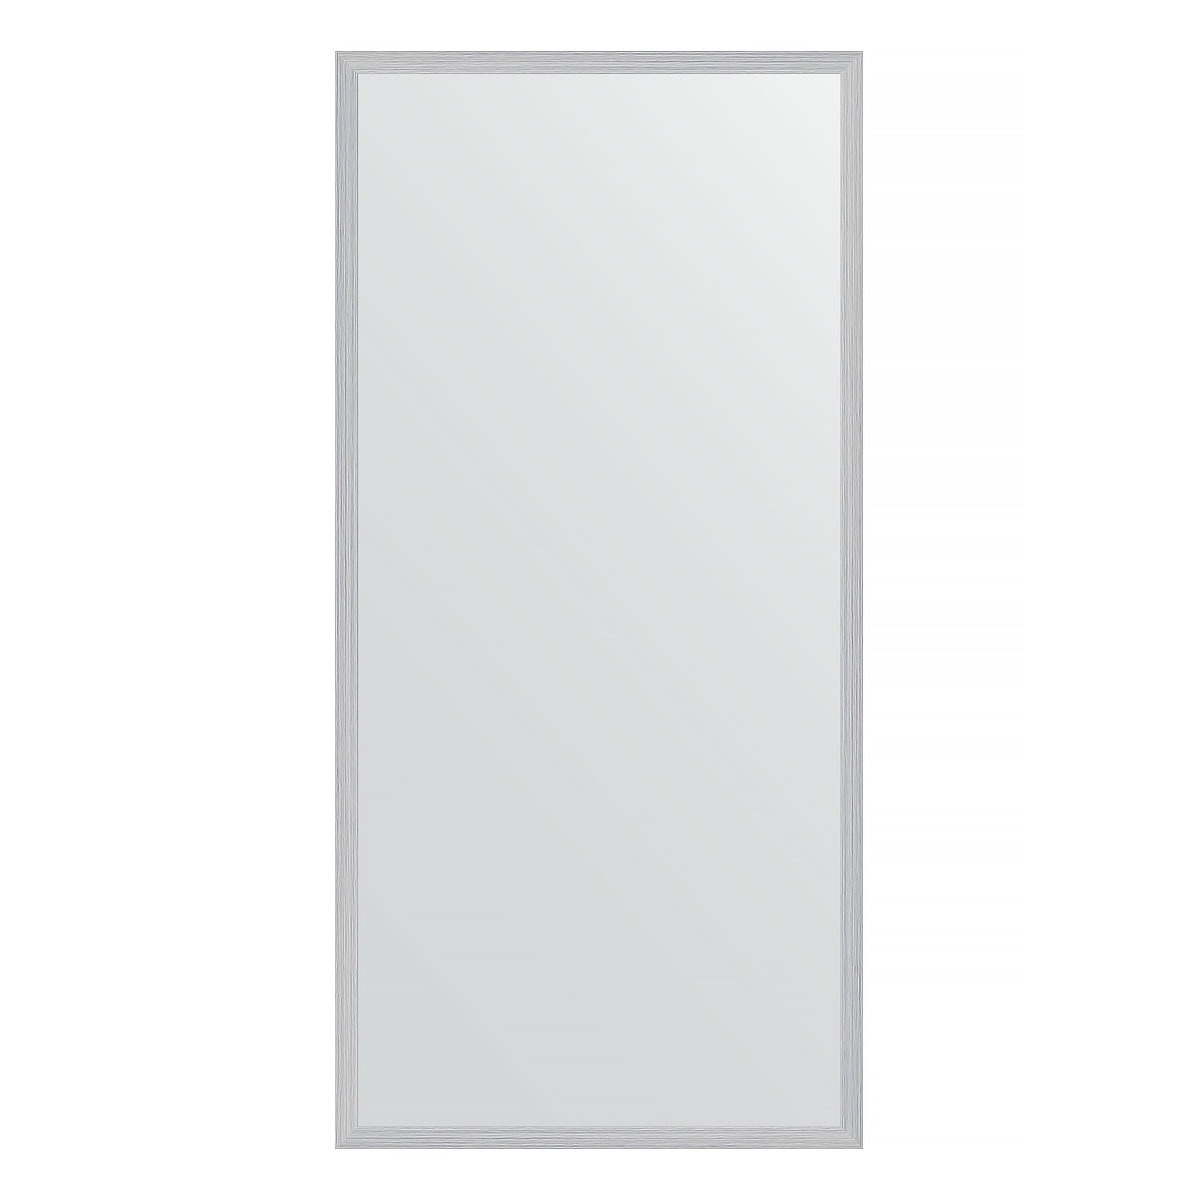 Зеркало в багетной раме Evoform сталь 20 мм 46х96 см зеркало в багетной раме evoform хром 18 мм 46х96 см